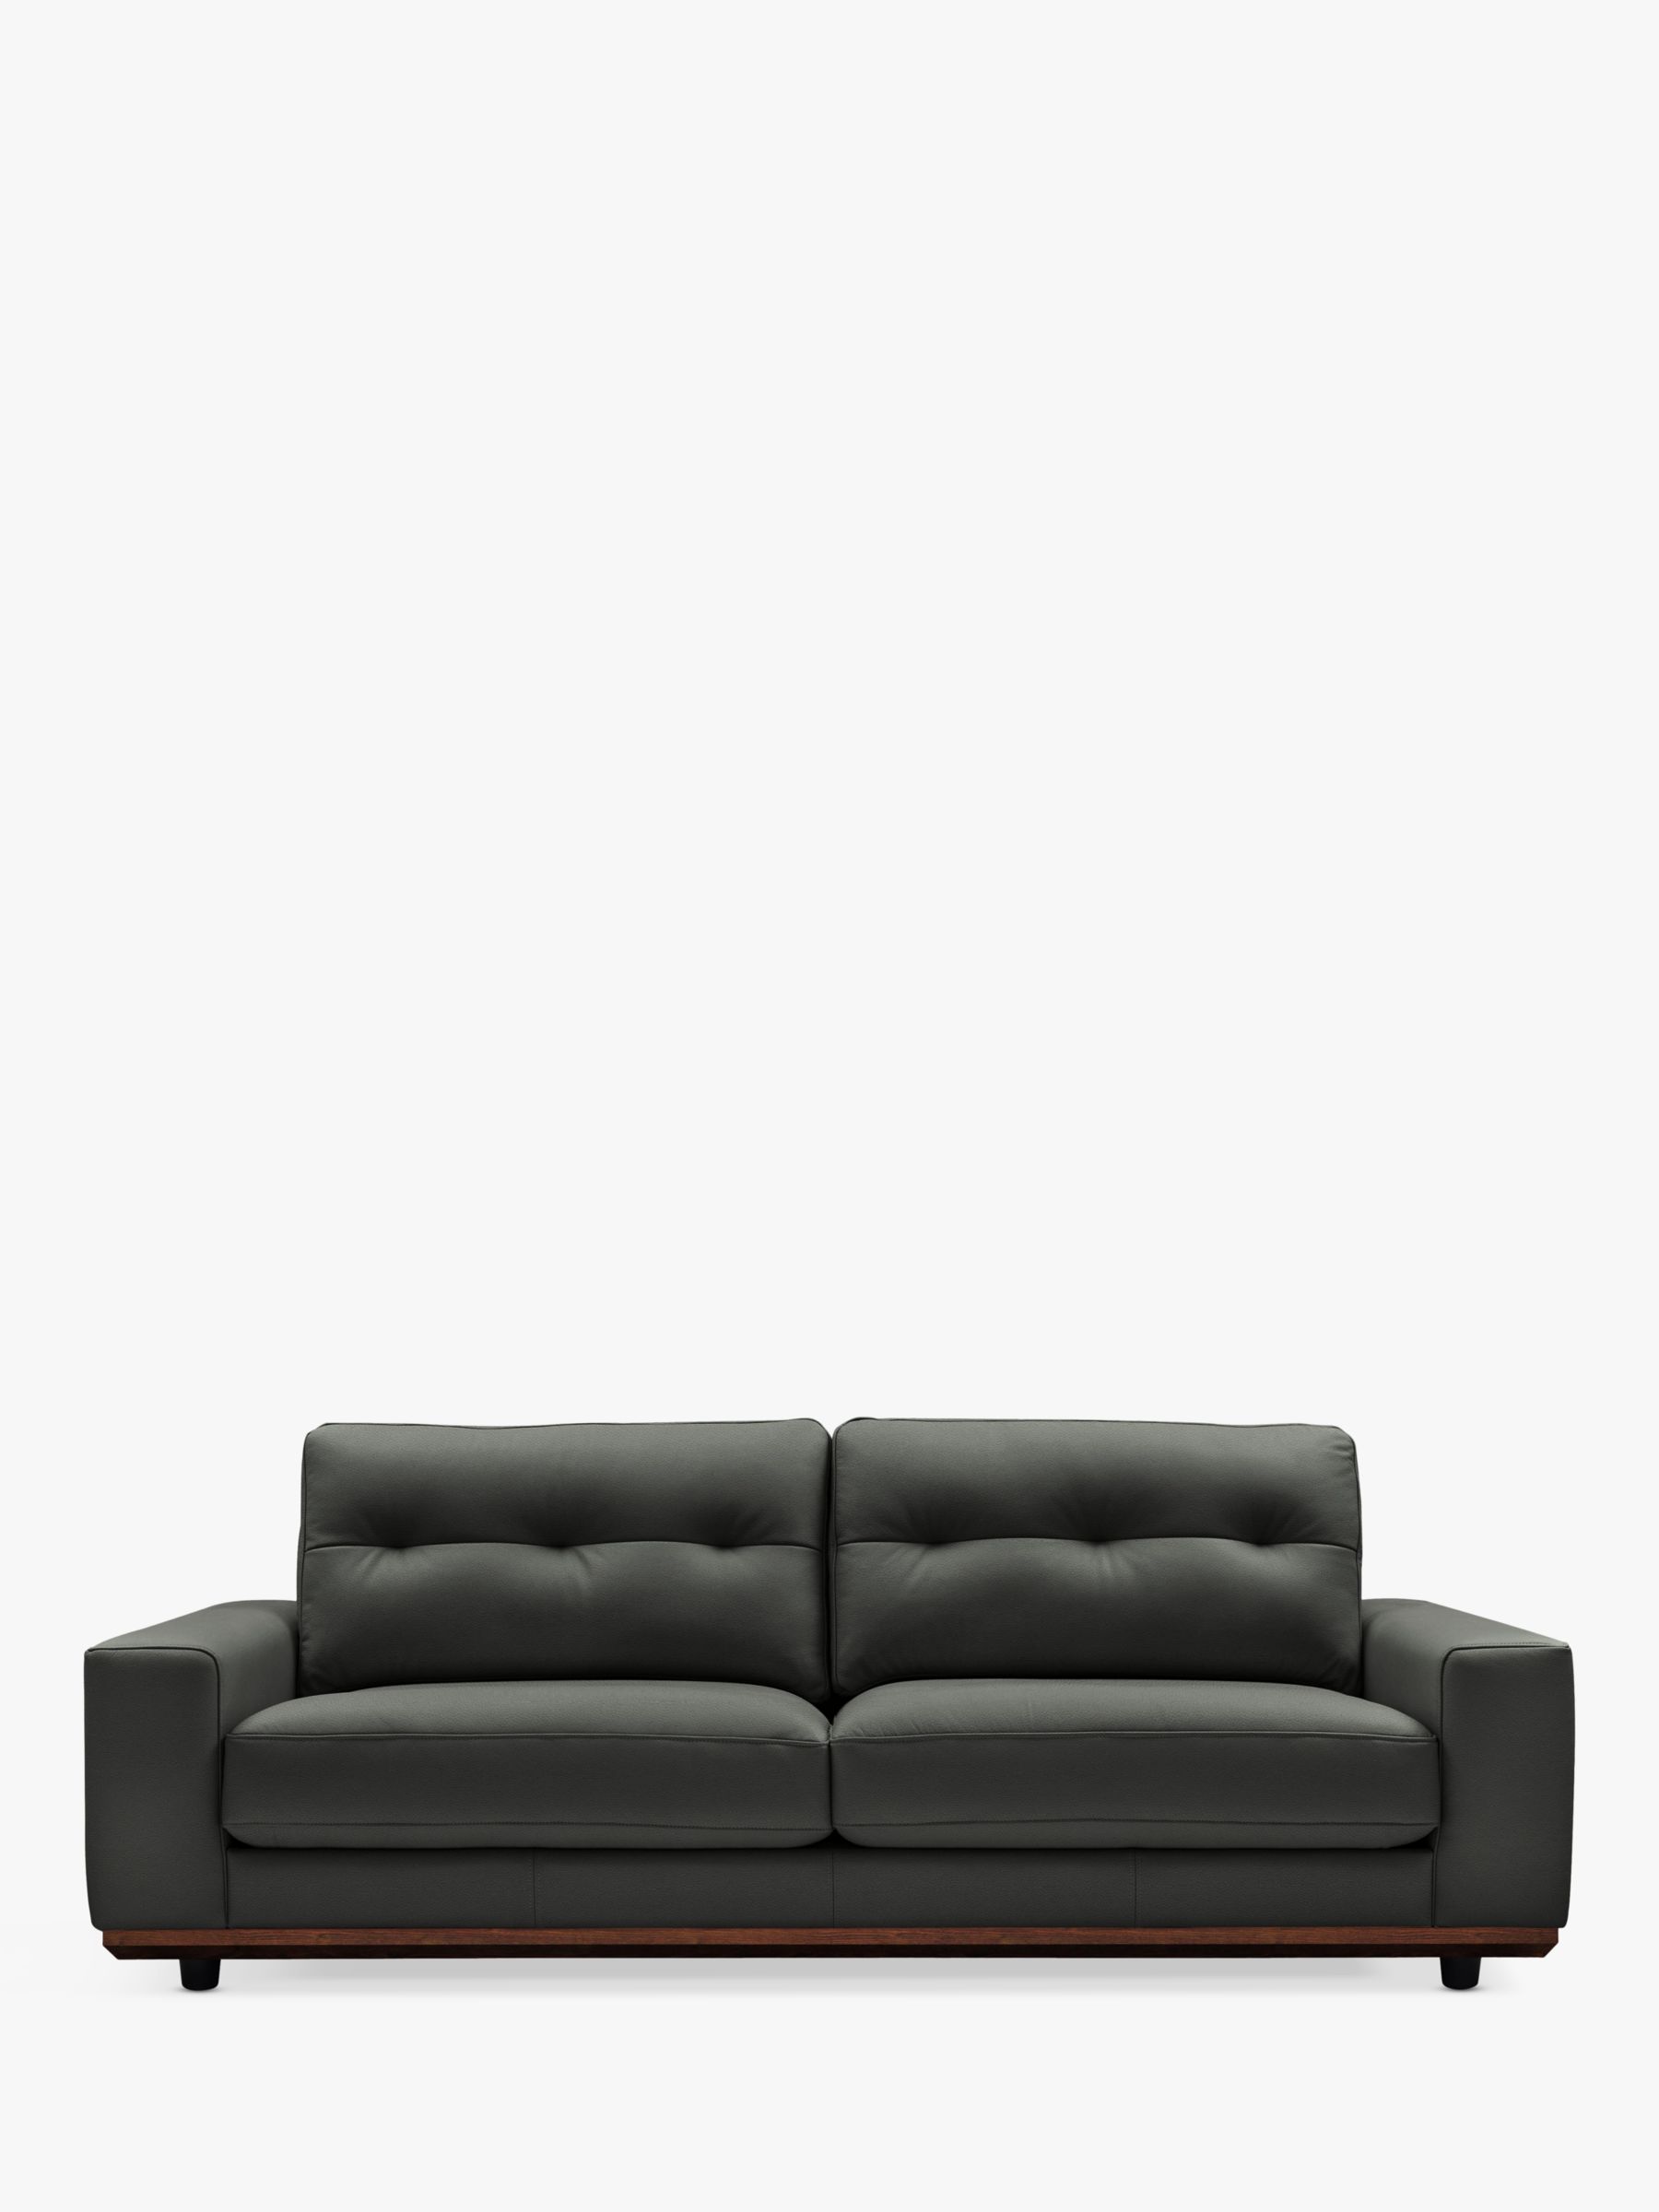 The Seventy One Range, G Plan Vintage The Seventy One Large 3 Seater Leather Sofa, Cambridge Slate